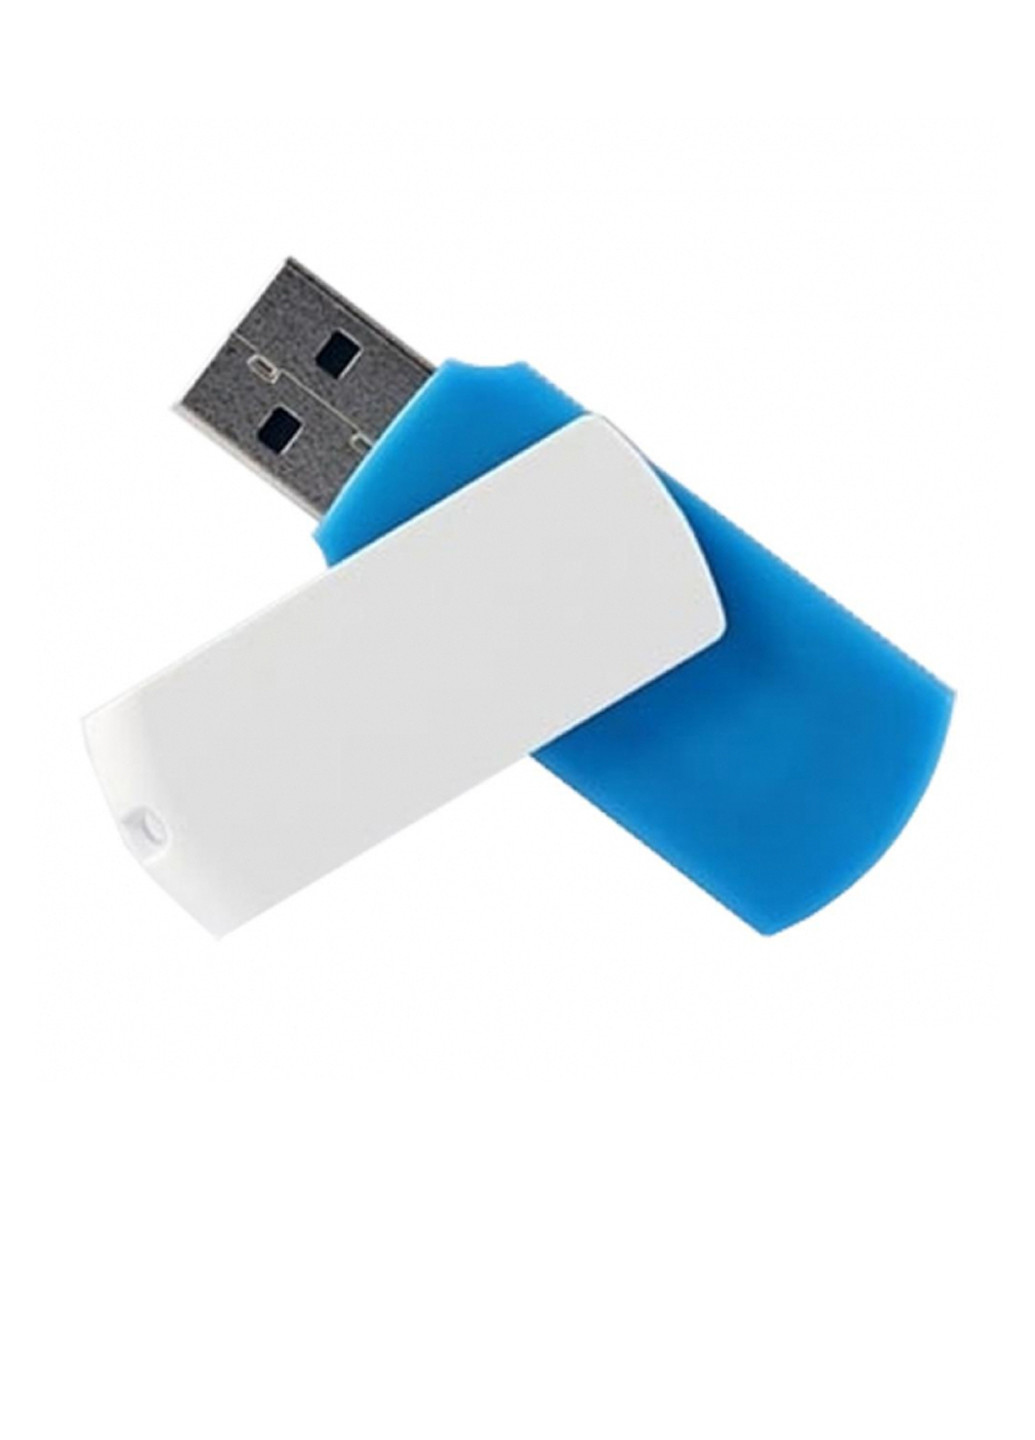 Флеш память USB 16GB UCO2 USB 2.0 Colour Mix (UCO2-0160MXR11) Goodram флеш память usb goodram 16gb uco2 usb 2.0 colour mix (uco2-0160mxr11) (136742758)